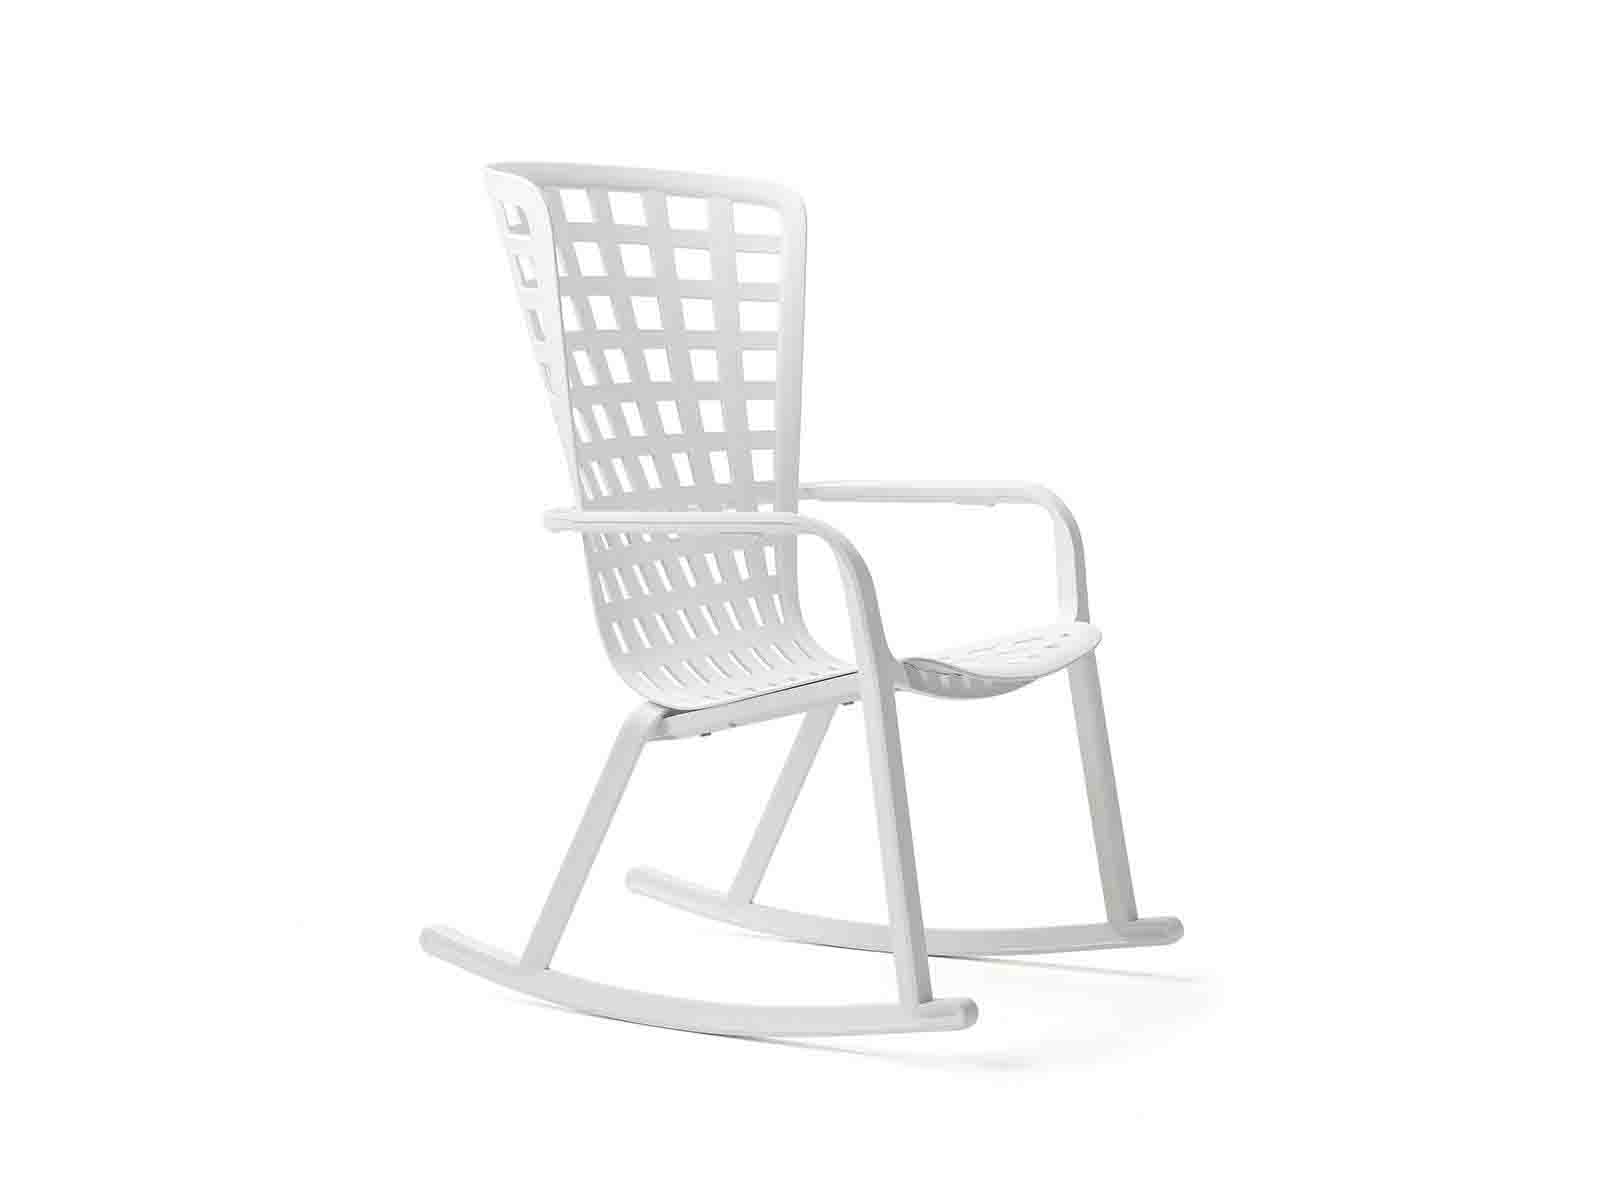 műanyag szék/hintaszék